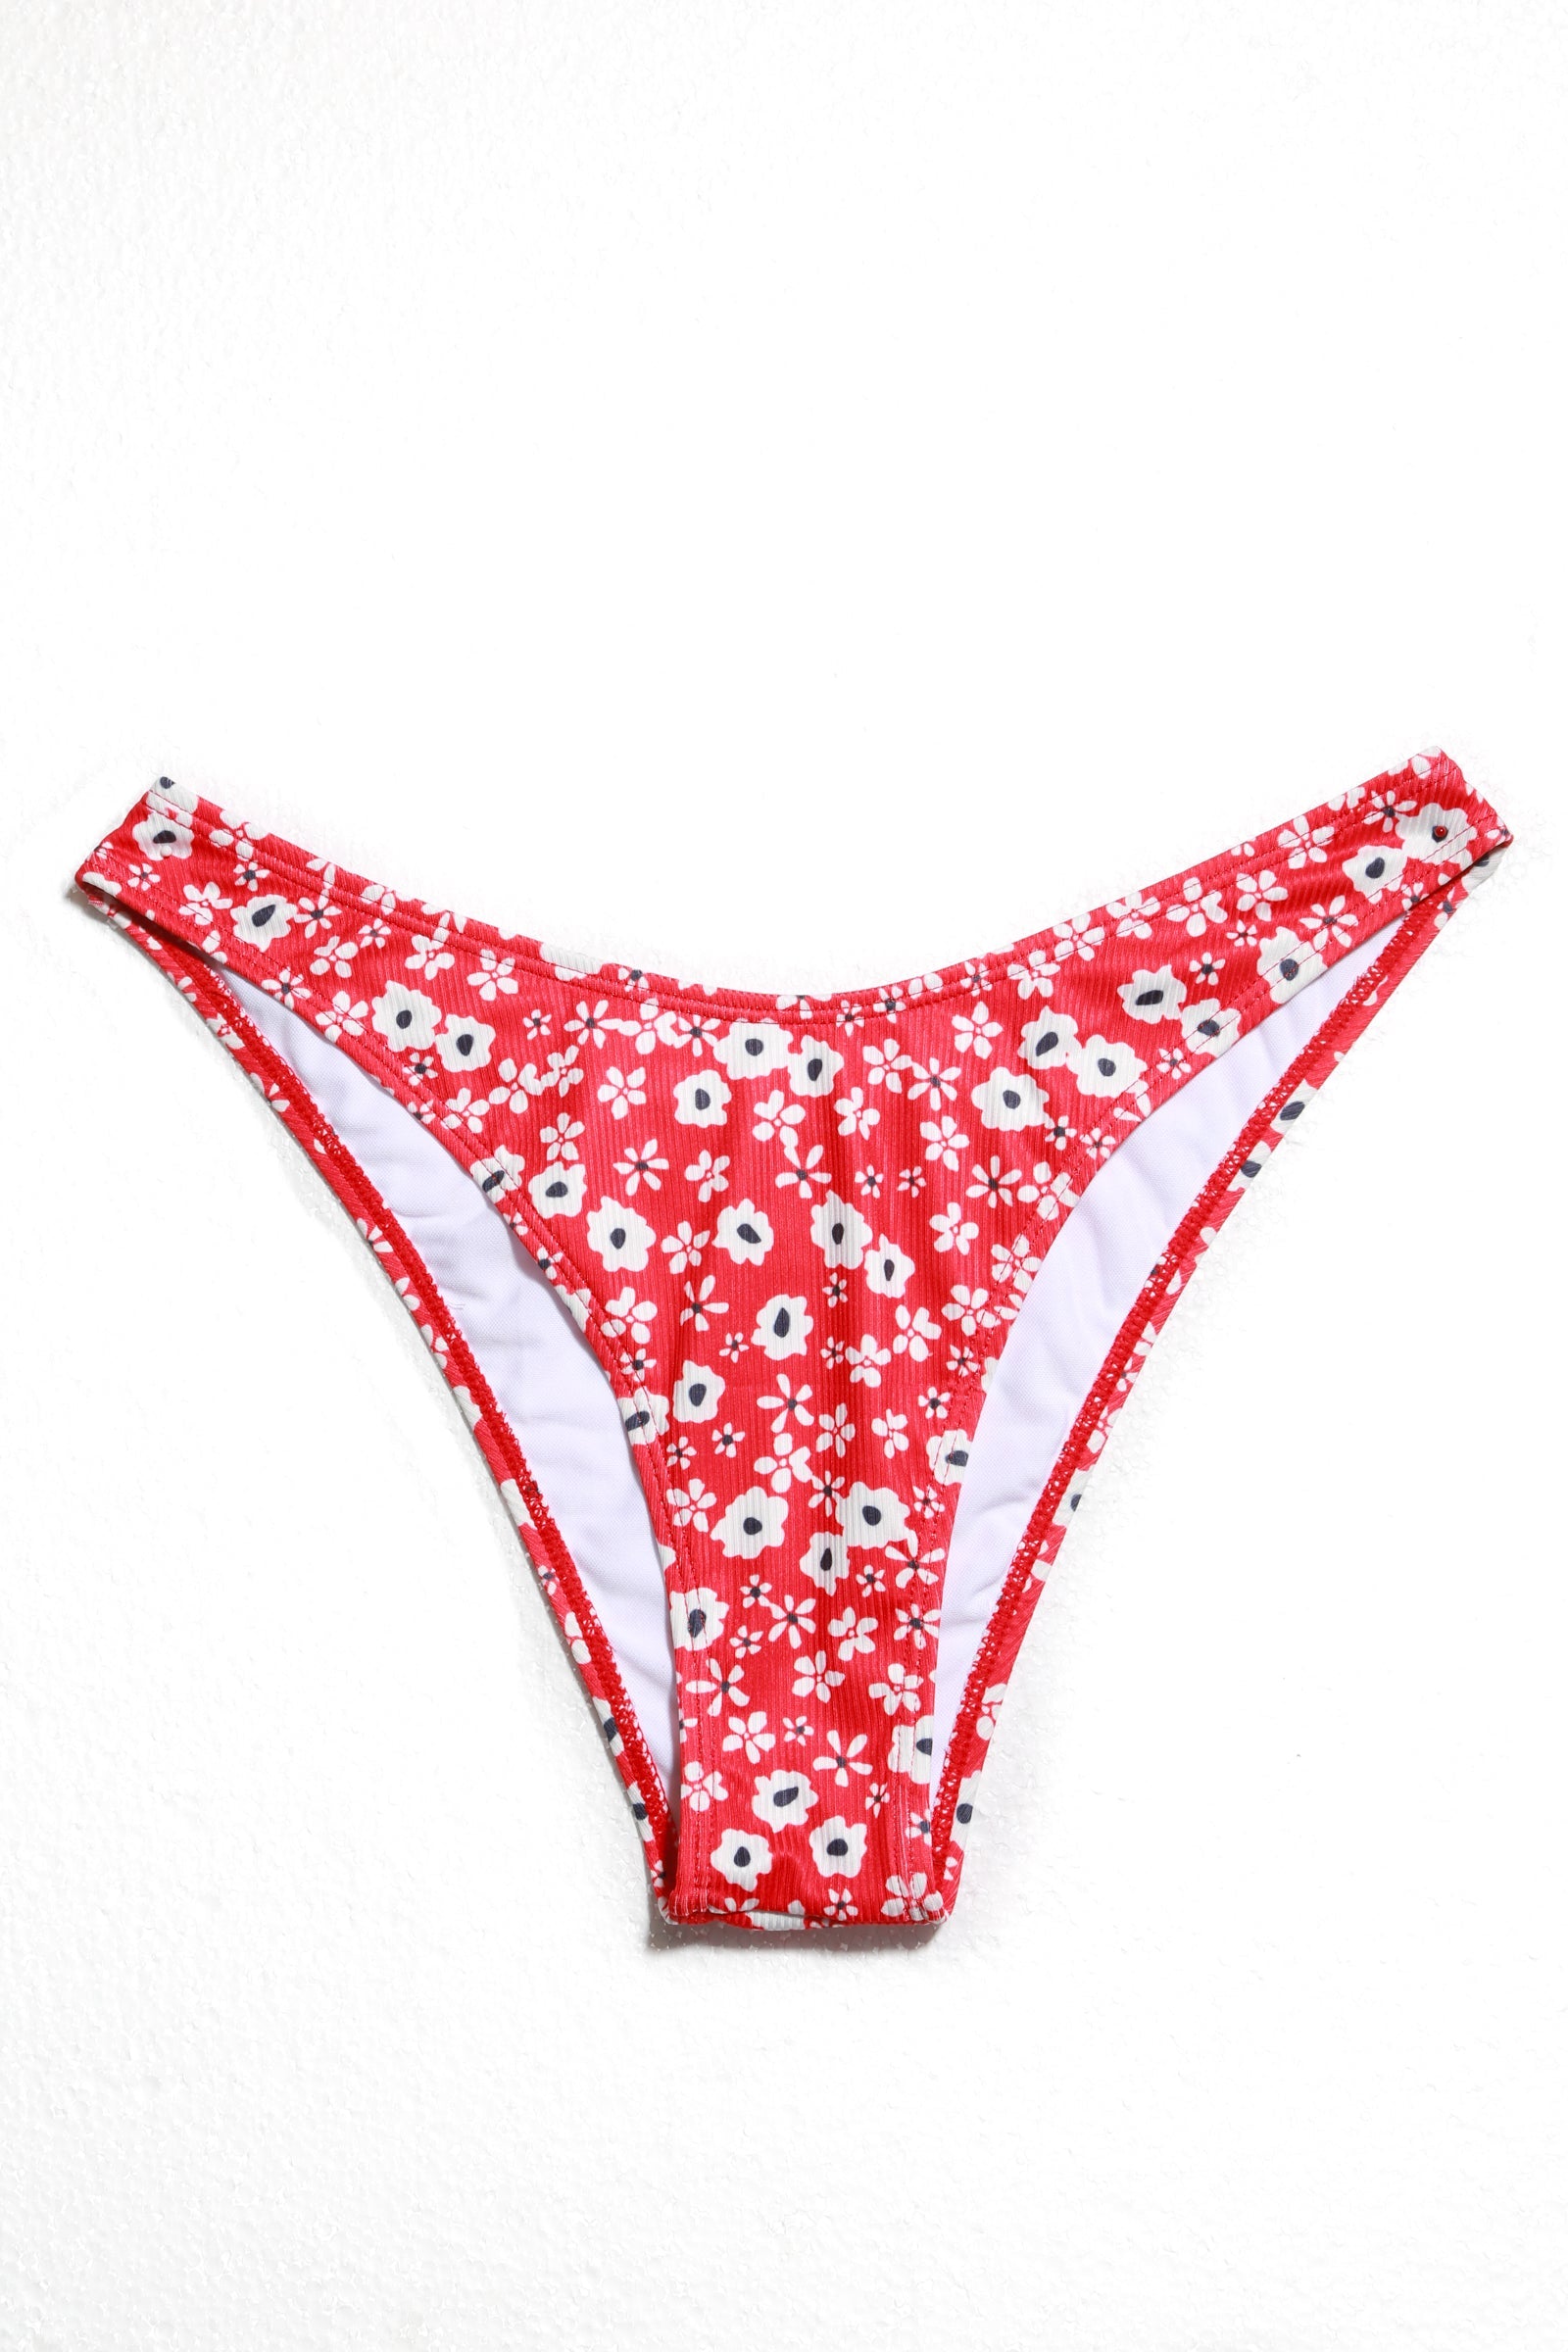 Image of Beach Bunny Ibiza Bikini Bottom -red